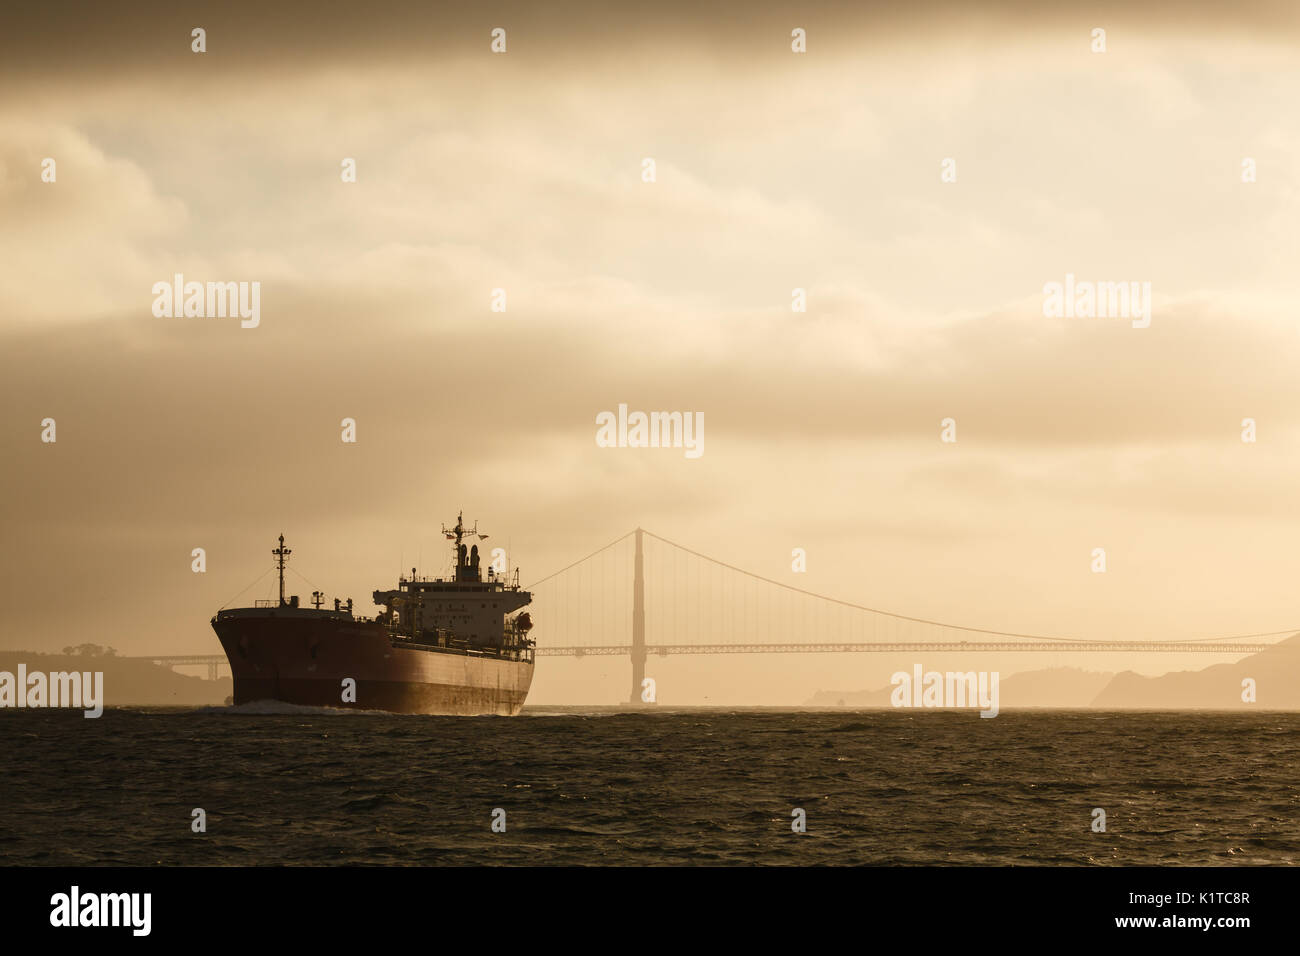 Giant tanker ship leaves golden gate bridge behind at sunset Stock Photo